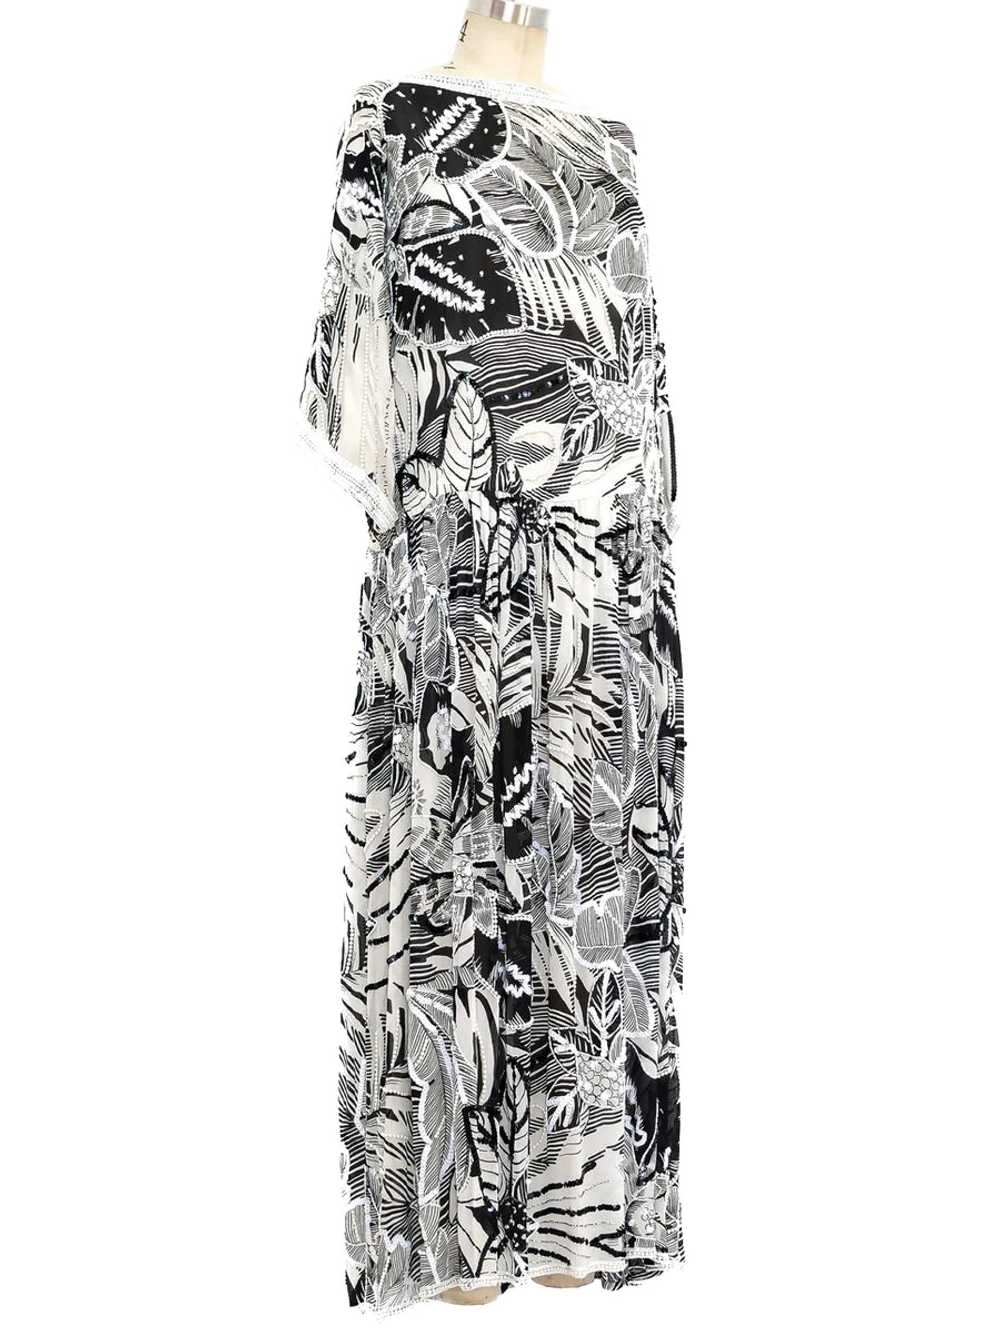 Bead Embellished Palm Print Dress - image 2